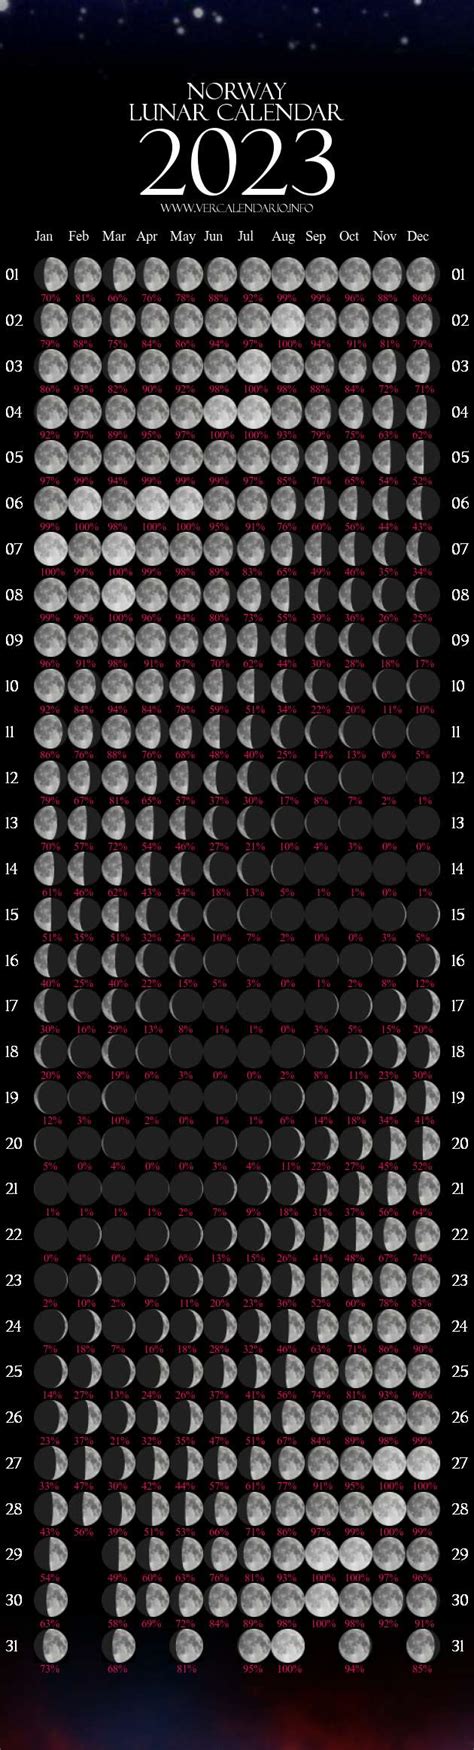 Lunar Calendar 2023 (Norway)